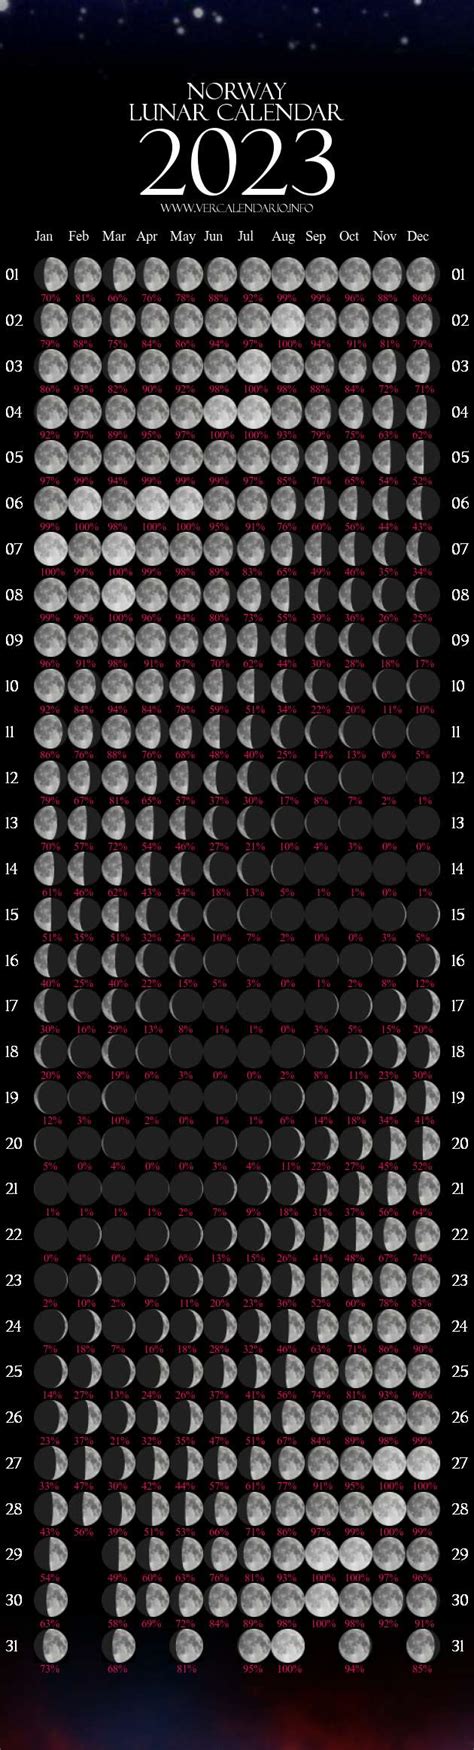 Lunar Calendar 2023 (Norway)